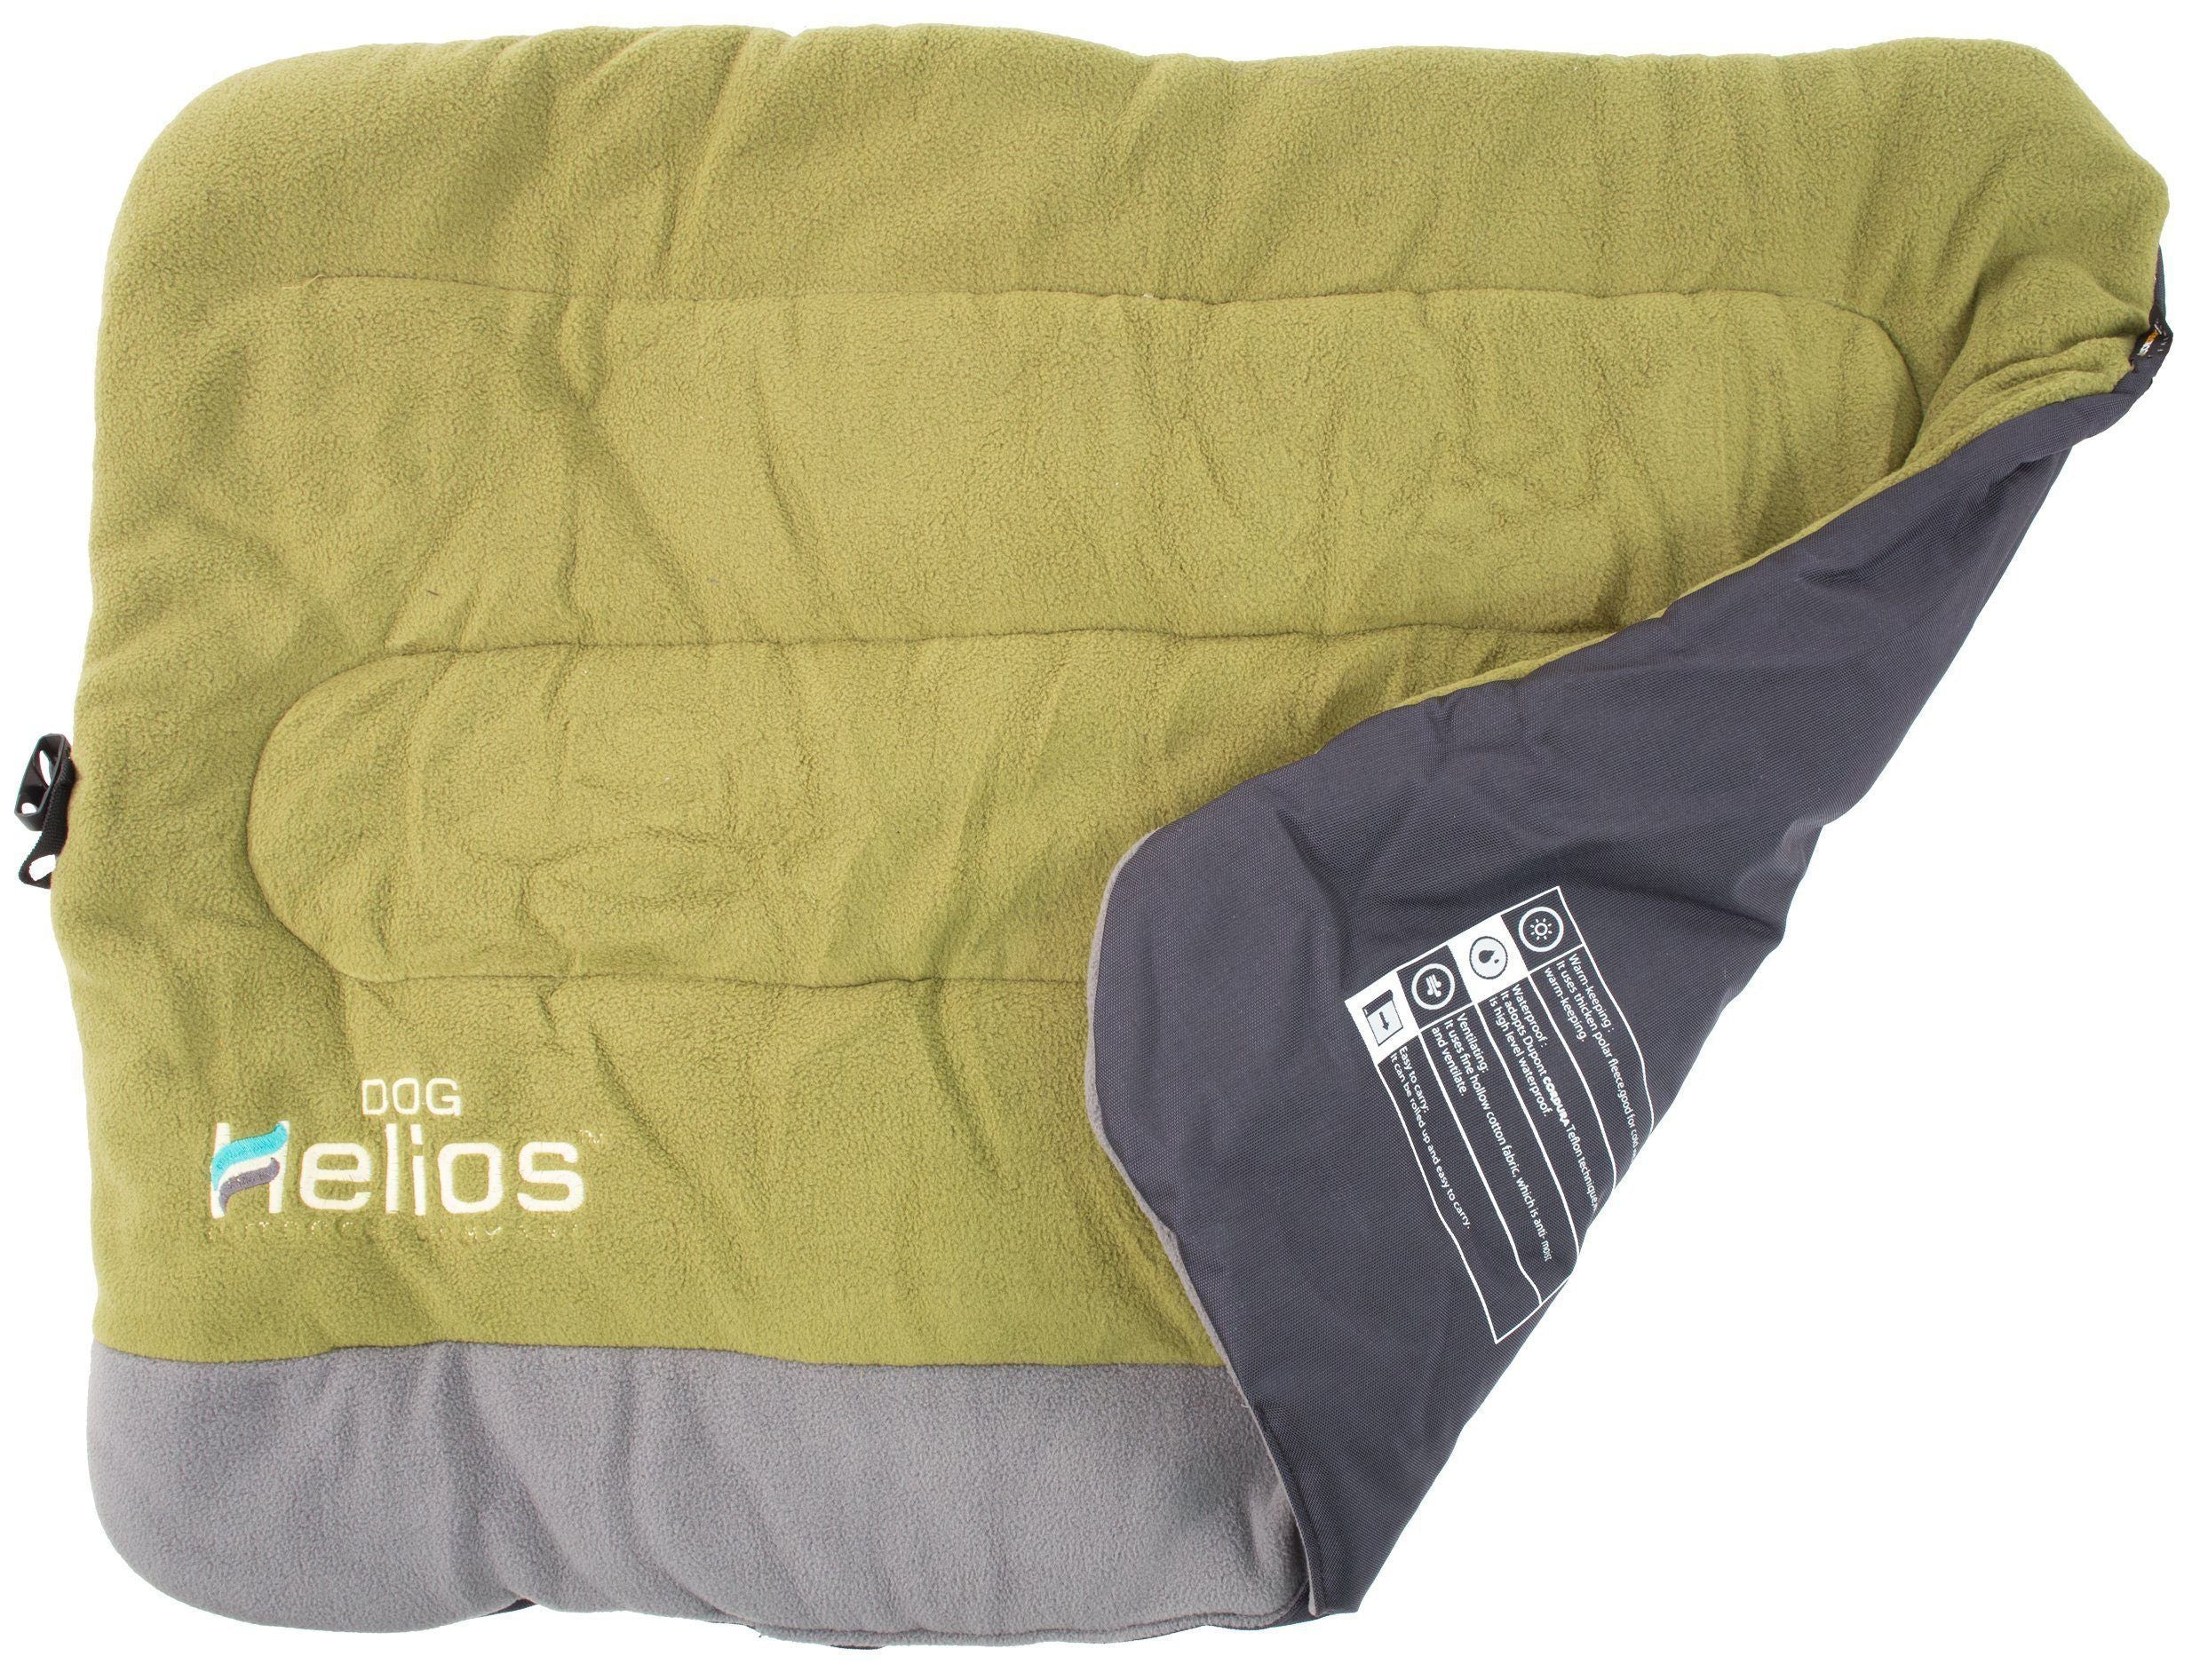 Dog Helios ® 'Combat-Terrain' Cordura-Nyco Reversible Nylon and Fleece Travel Camping Dog Bed Medium Olive Green, Grey